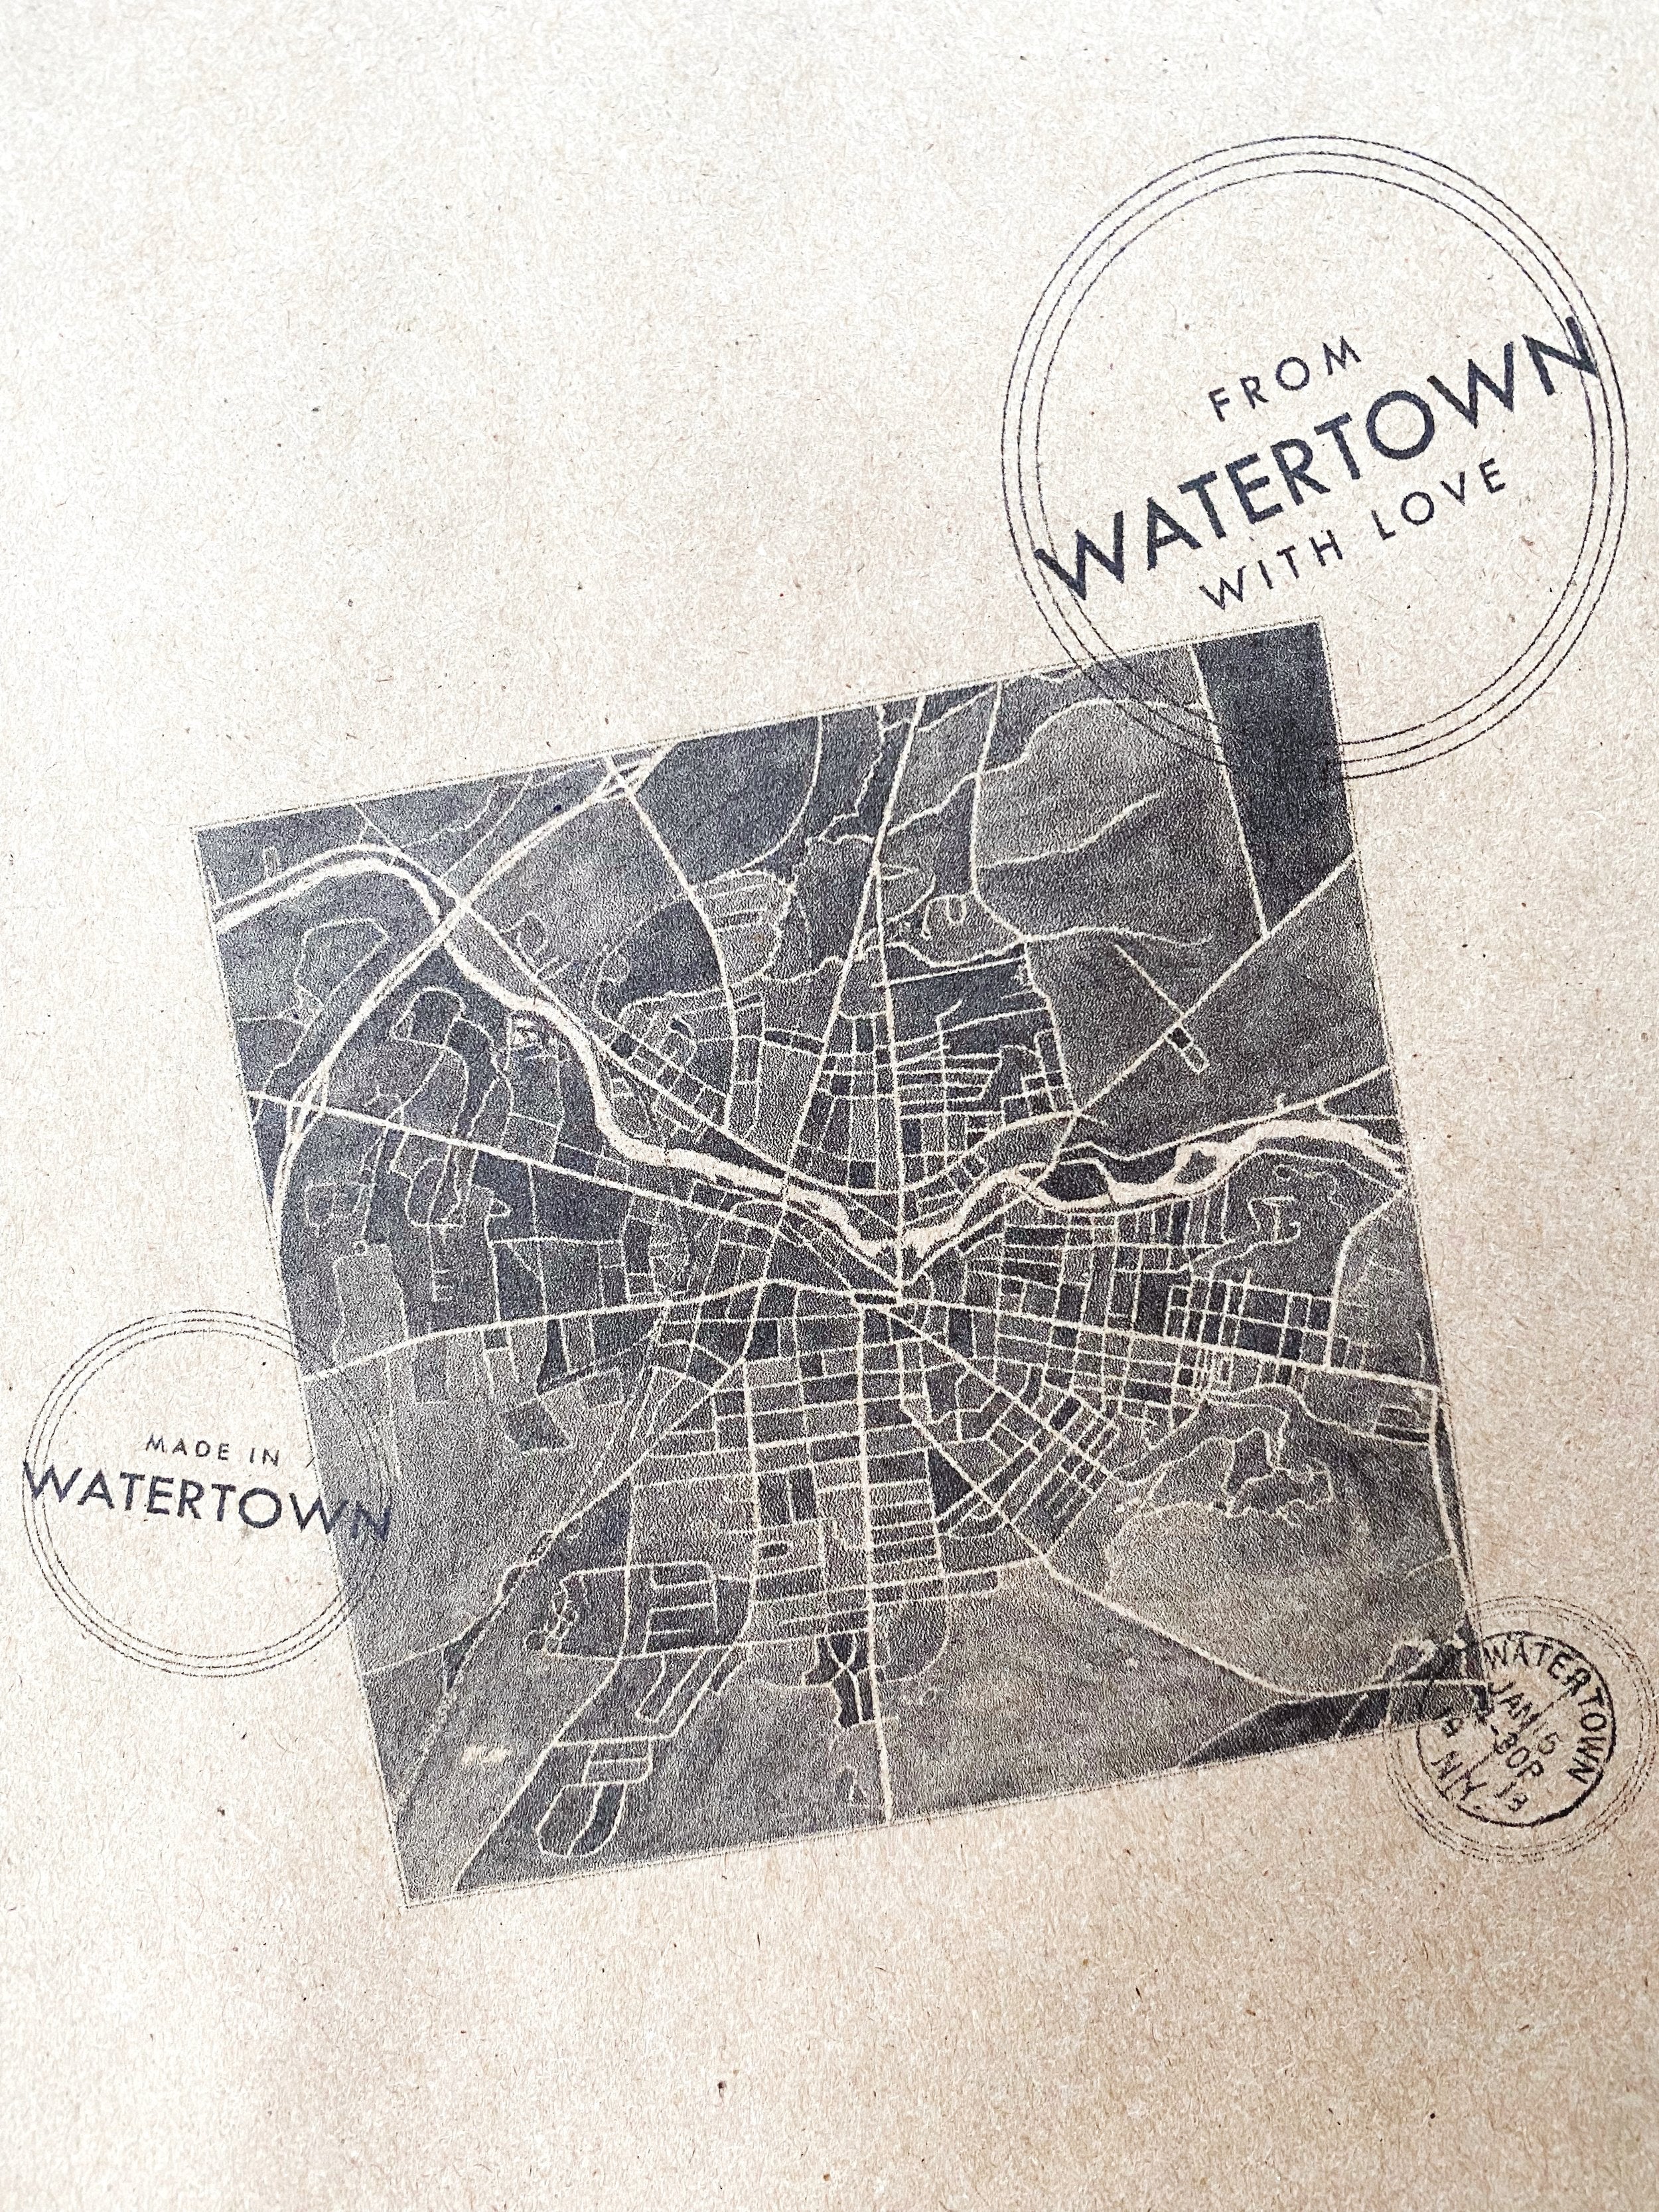 WATERTOWN NY Watercolor City Blocks Map: GIFT BUNDLE